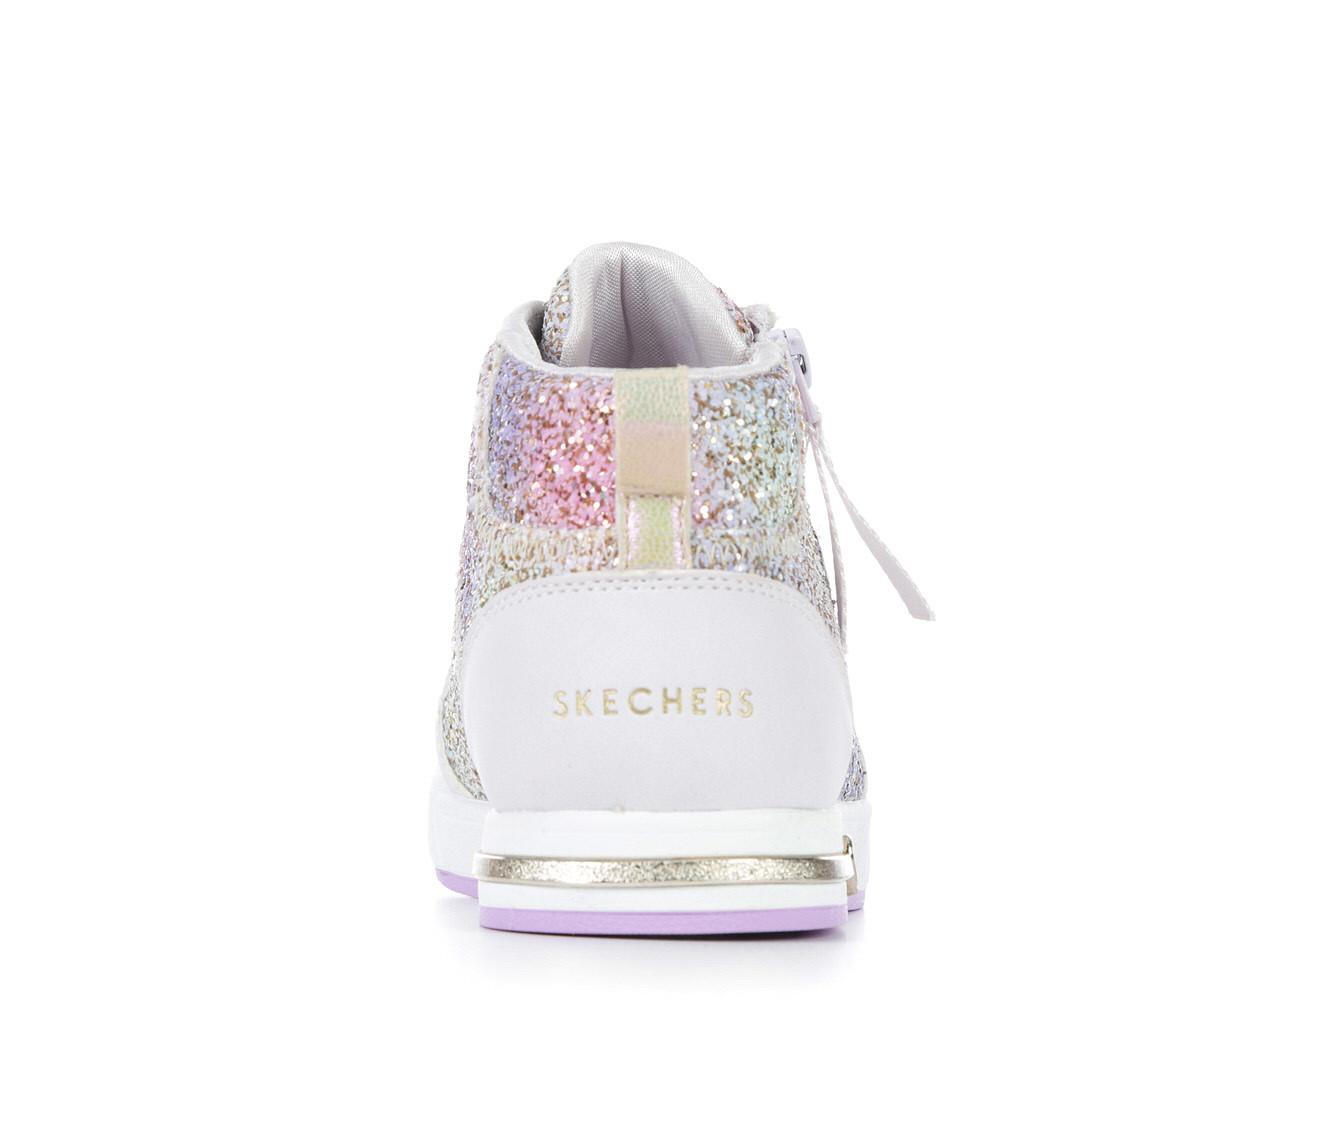 Skechers Shoutouts Shimmer Party Sneaker - Little Kid - White / Pink